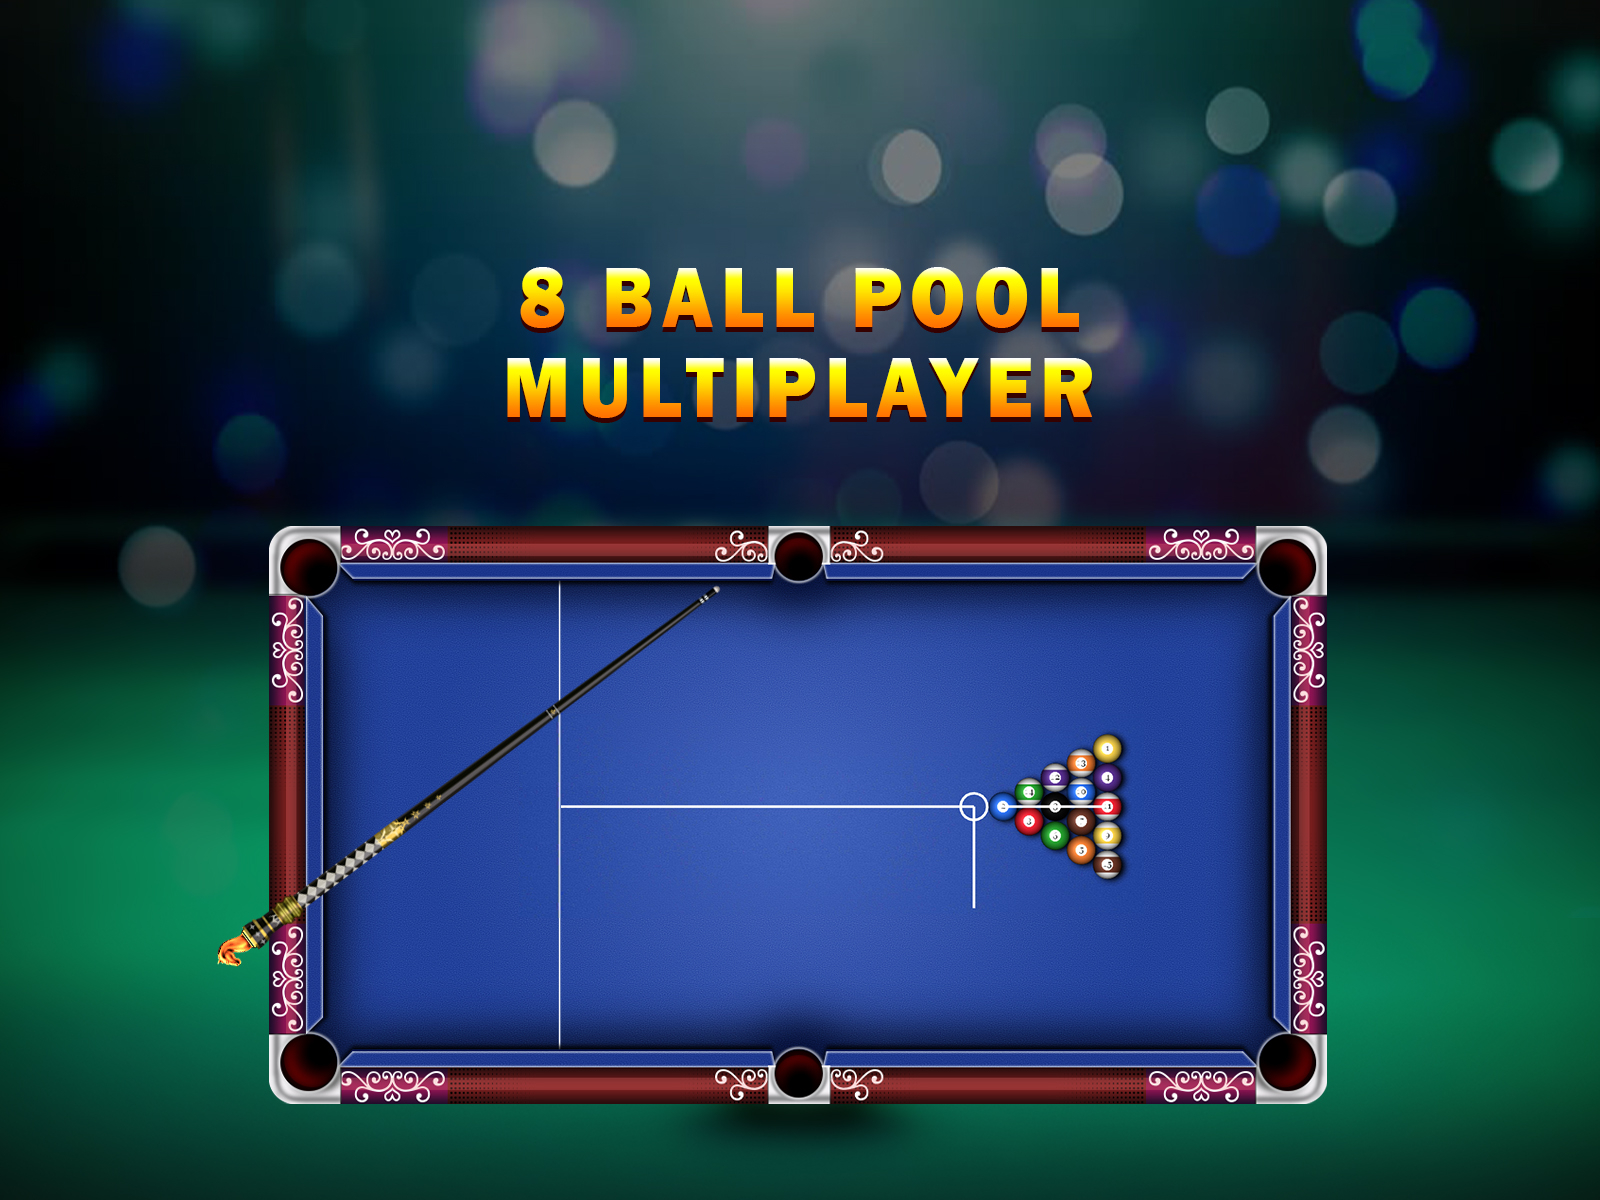 Billiards Multiplayer Pool